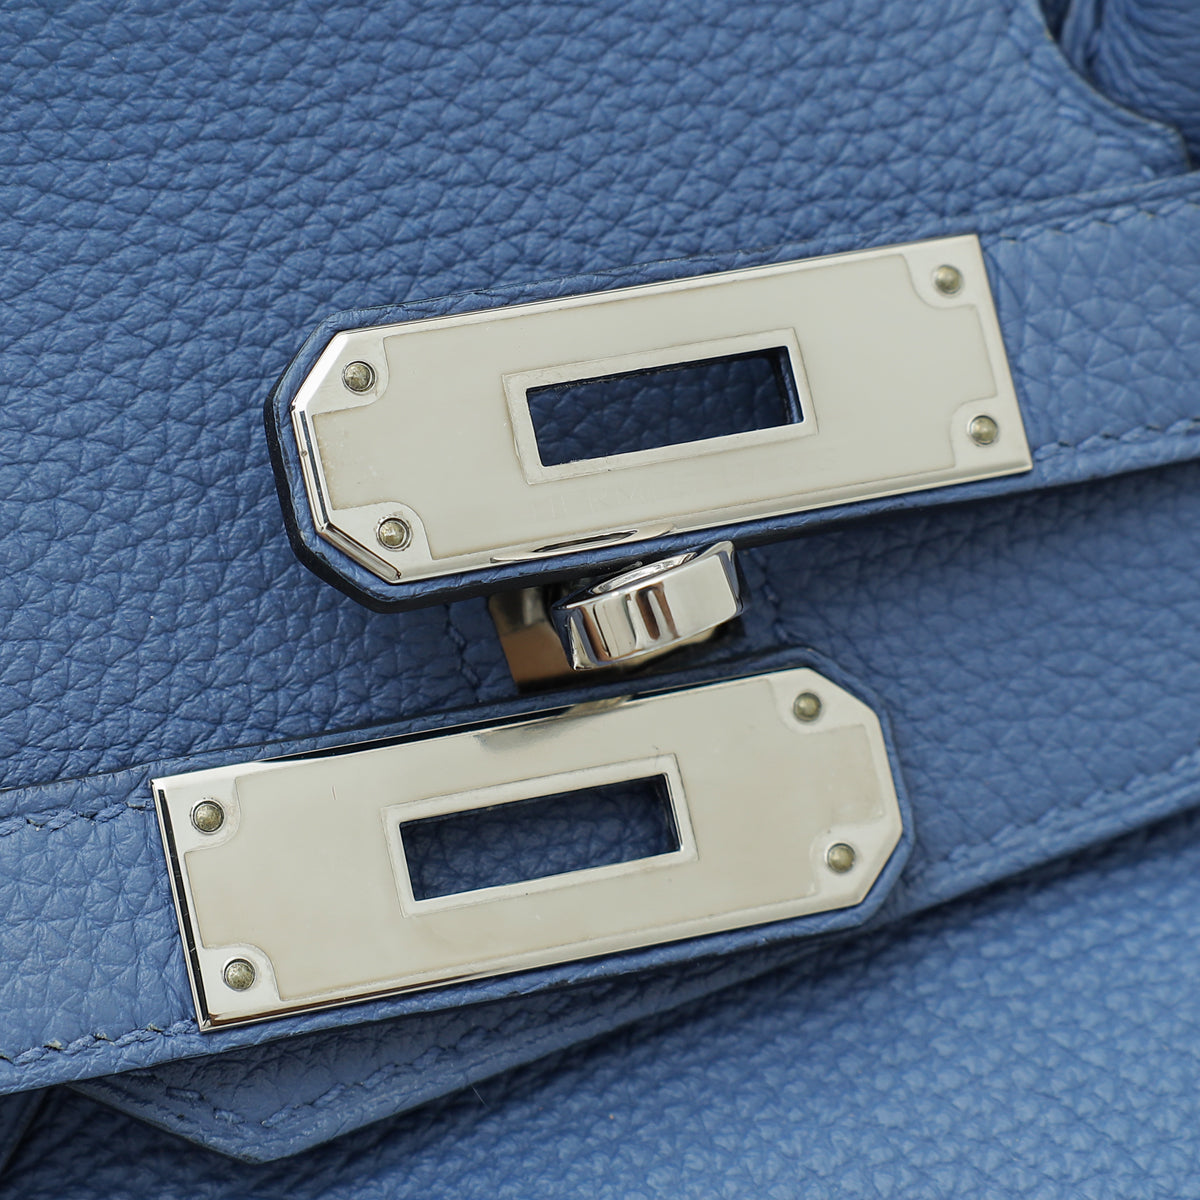 Hermes Birkin 30 Bag Blue Brighton Epsom Leather with Gold Hardware